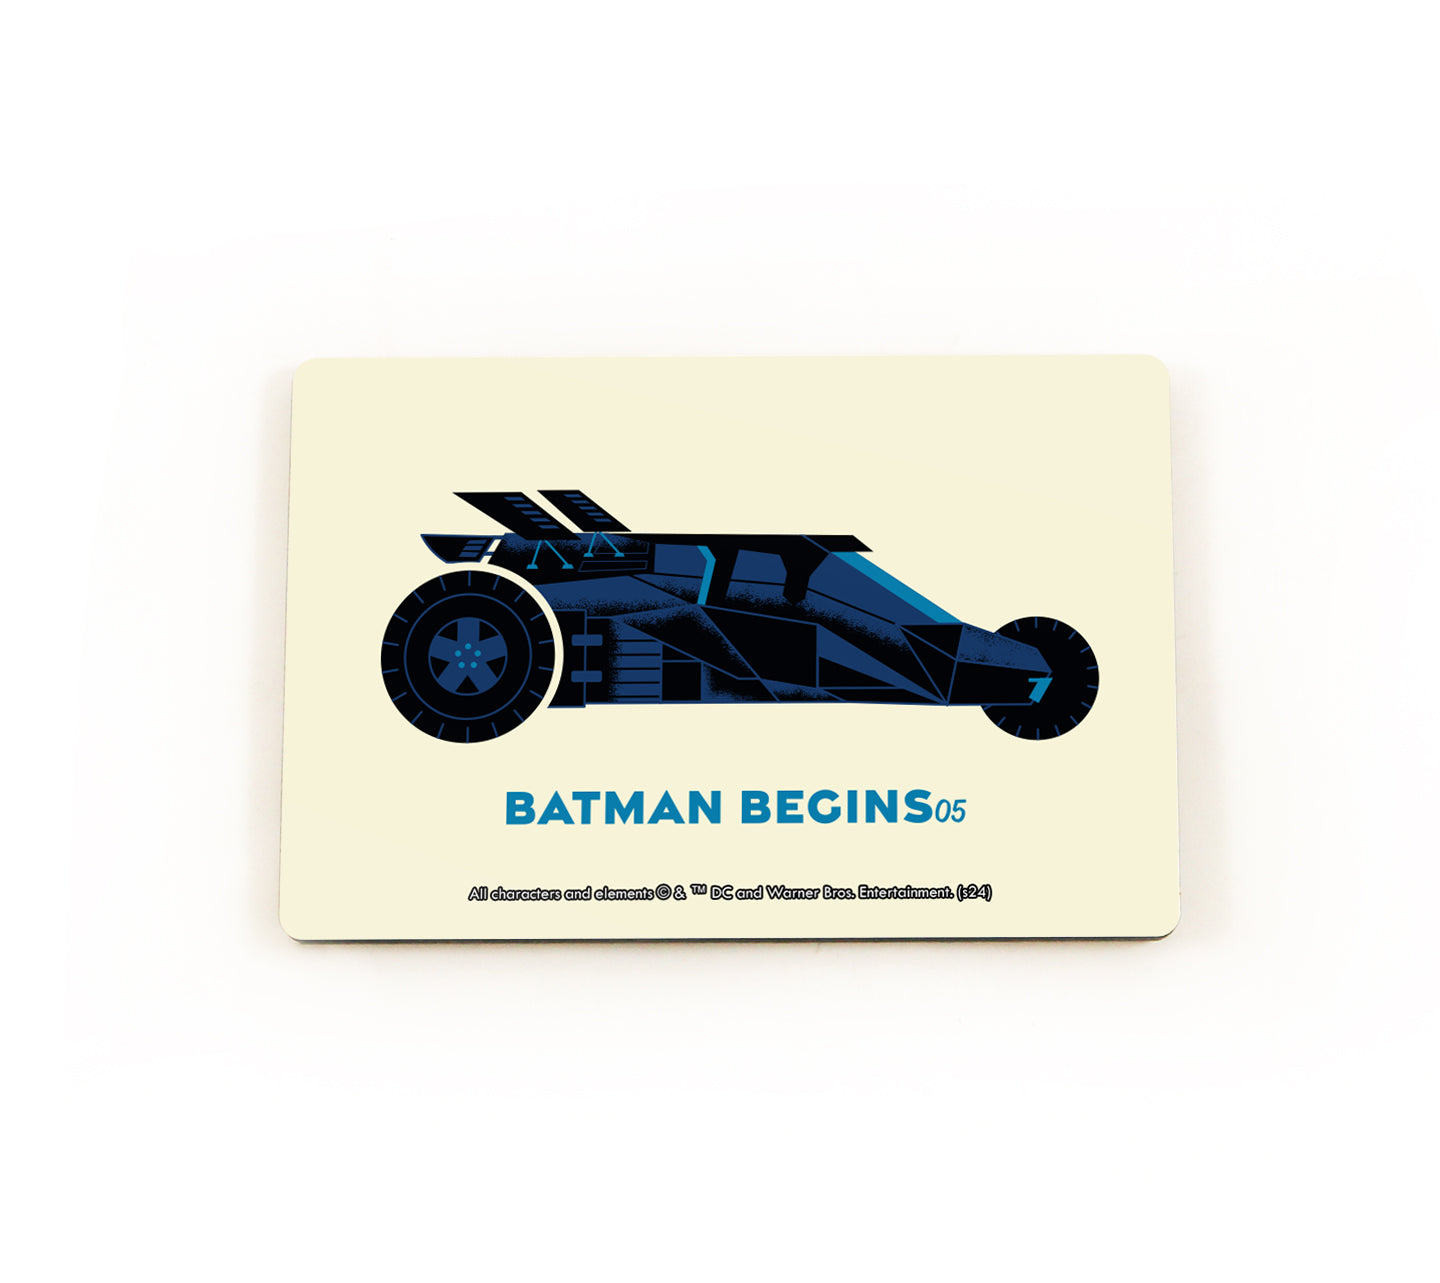 Batman 85th Anniversary (Batman Begins Batmobile 2005) Hardboard Rectangle Magnet HBDMH033